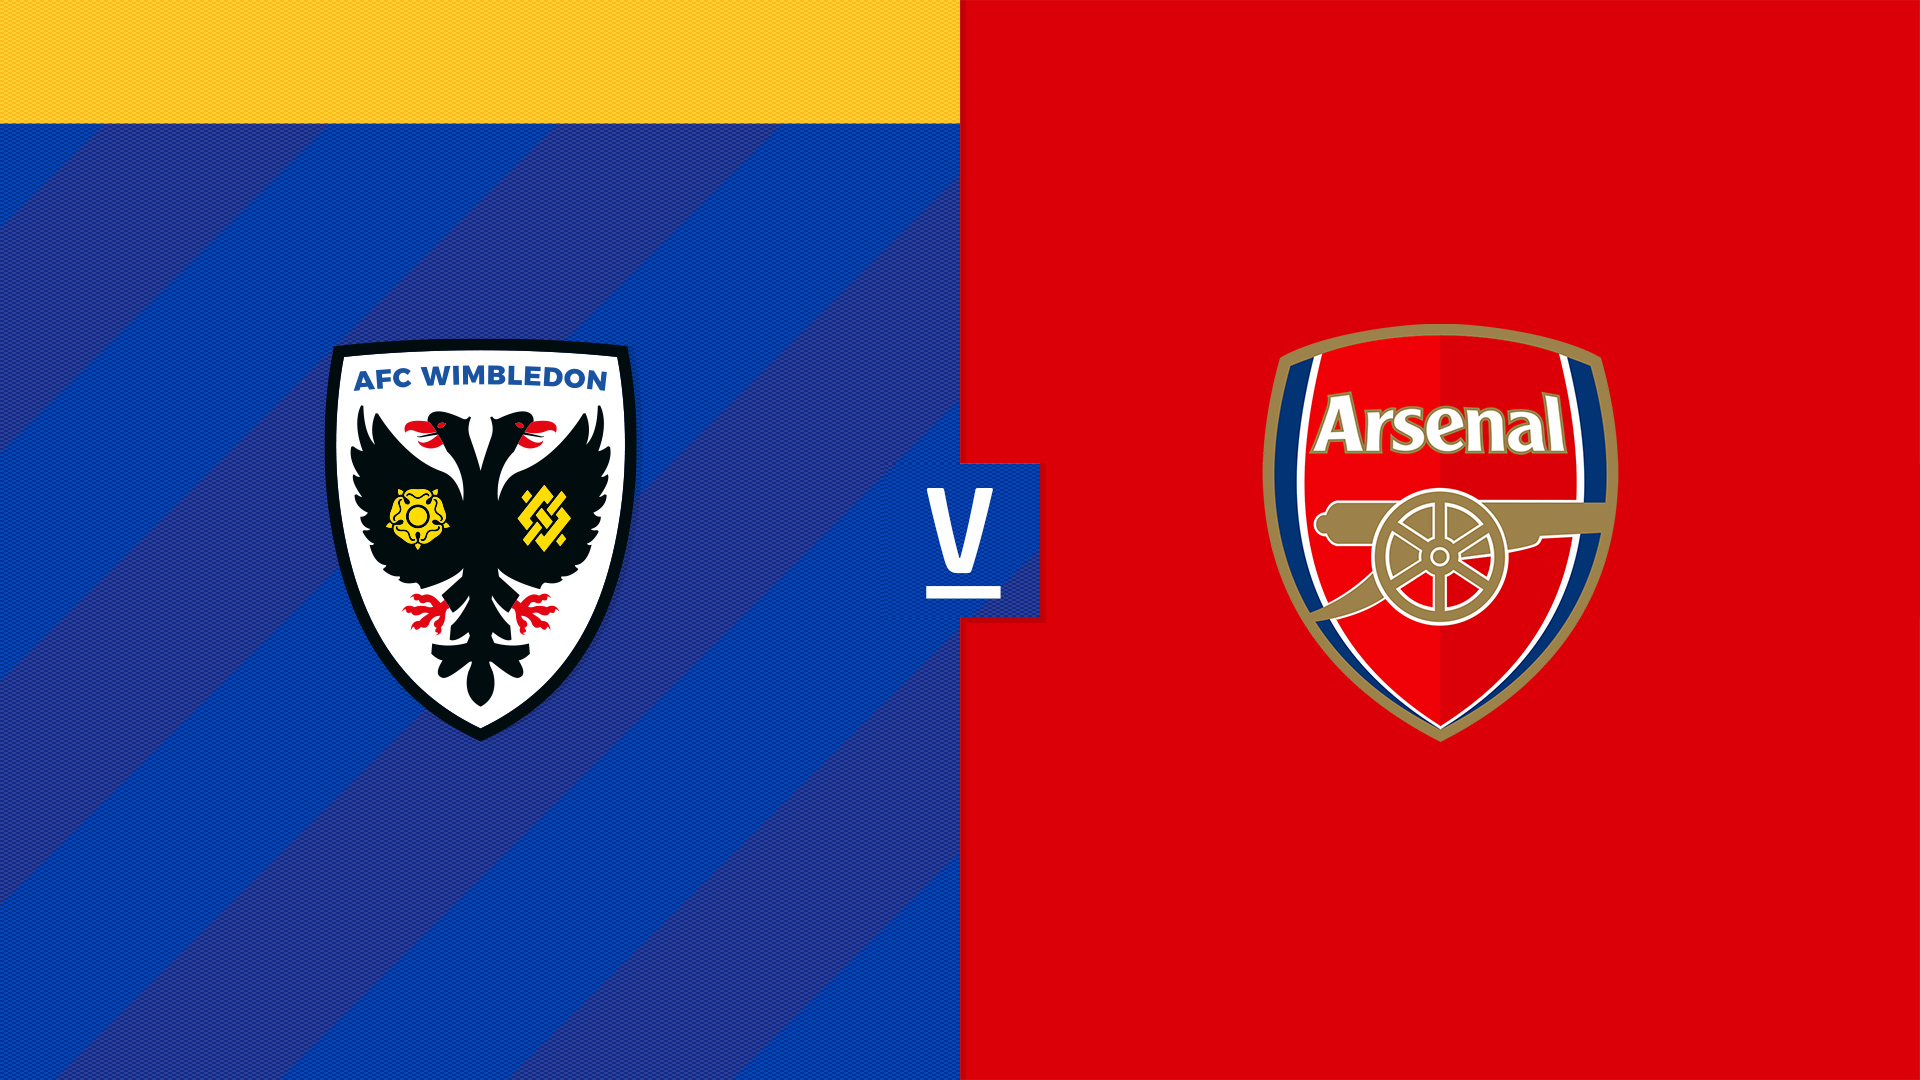 Arsenal vs afc wimbledon